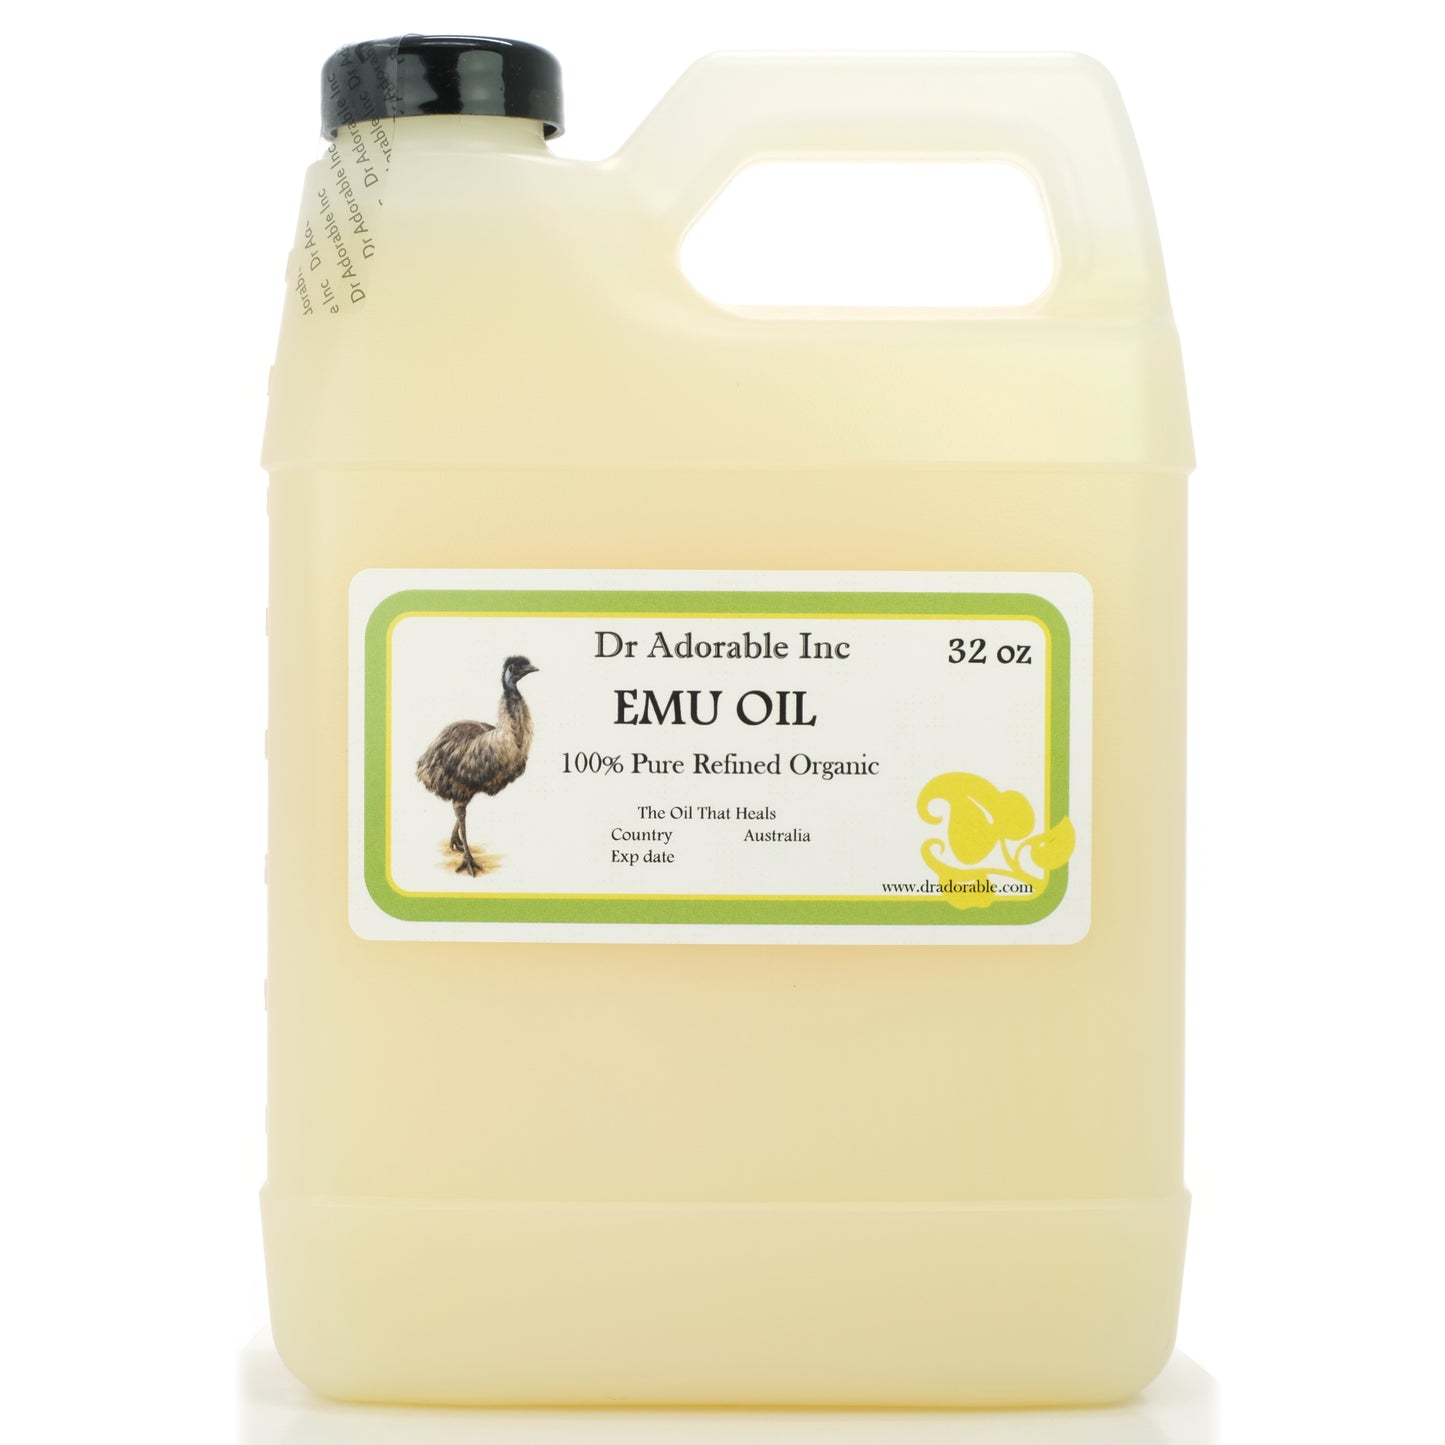 Emu Oil - 100% Pure Natural Triple Refined Organic